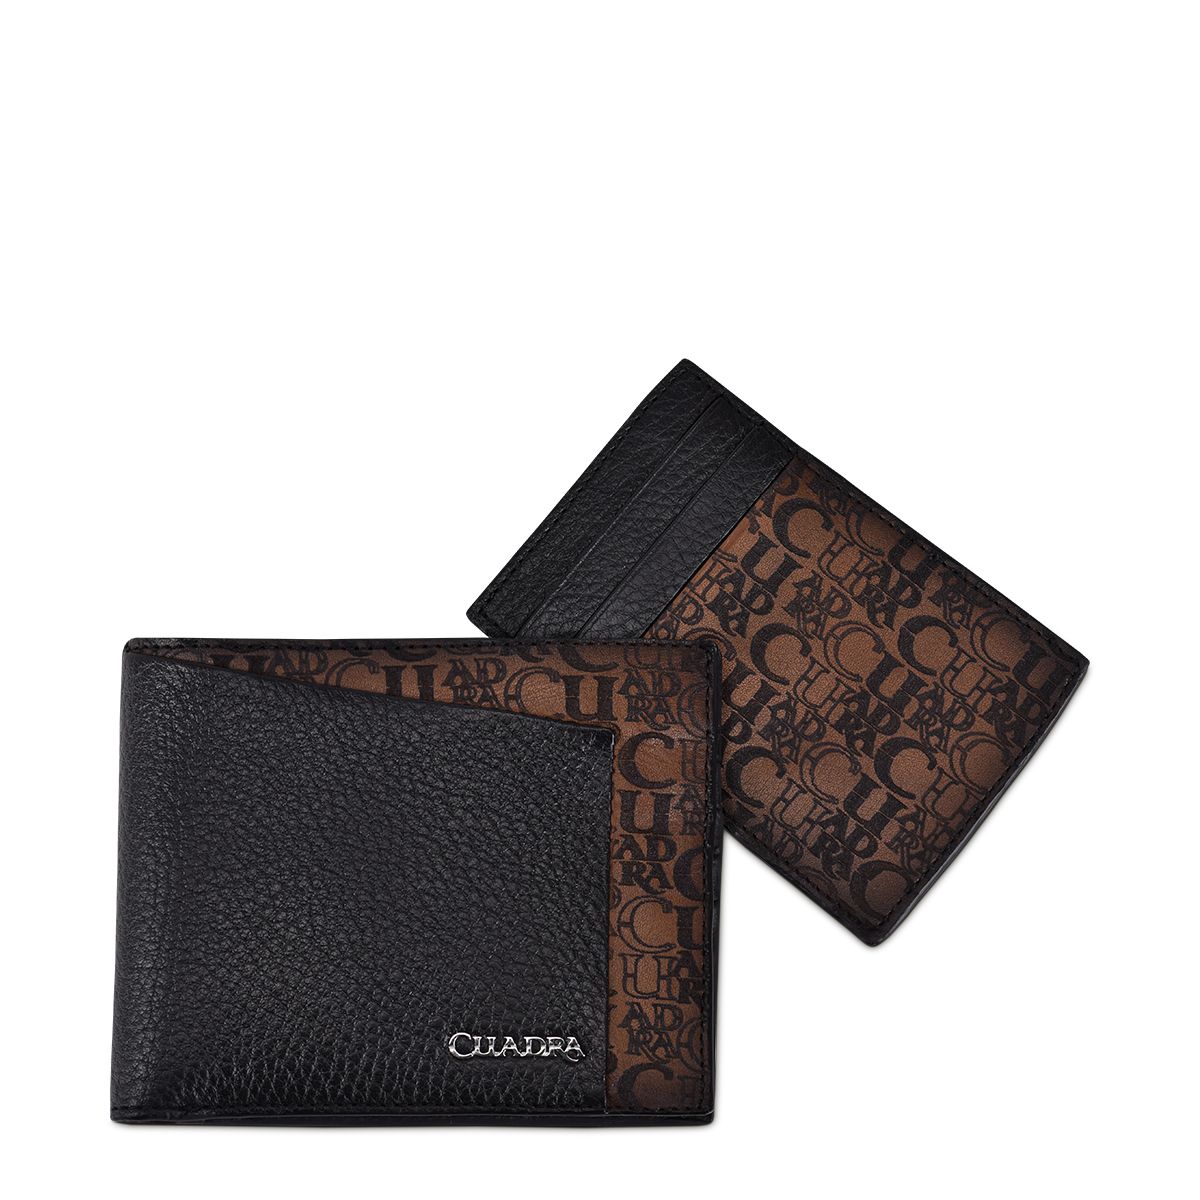 B3038RS - Cuadra black casual fashion leather bi fold wallet for men-Kuet.us